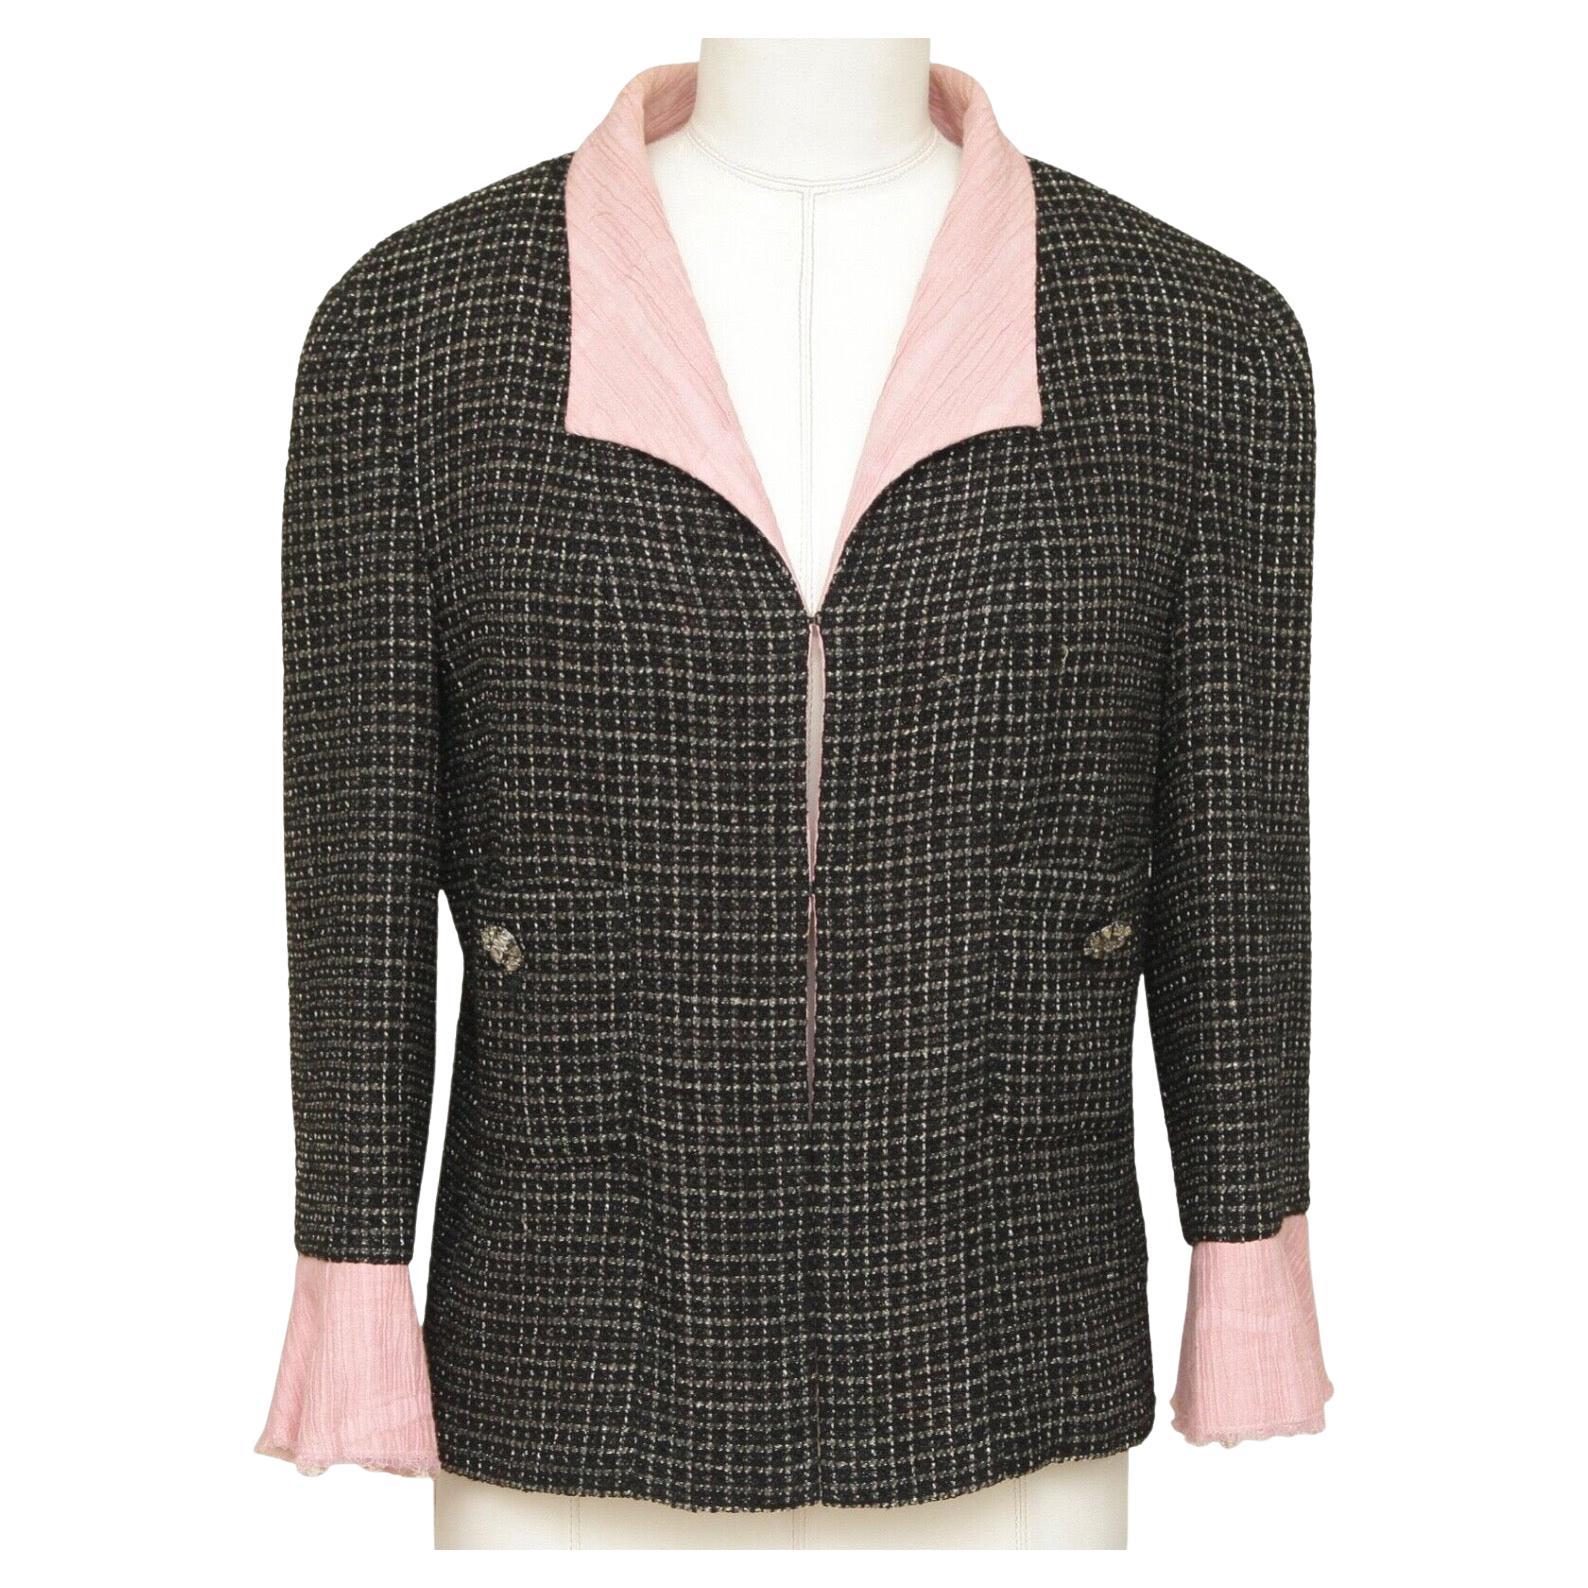 CHANEL Jacket Blazer Coat Tweed Black Iridescent Pink Gripoix Button Sz 40 2012 For Sale